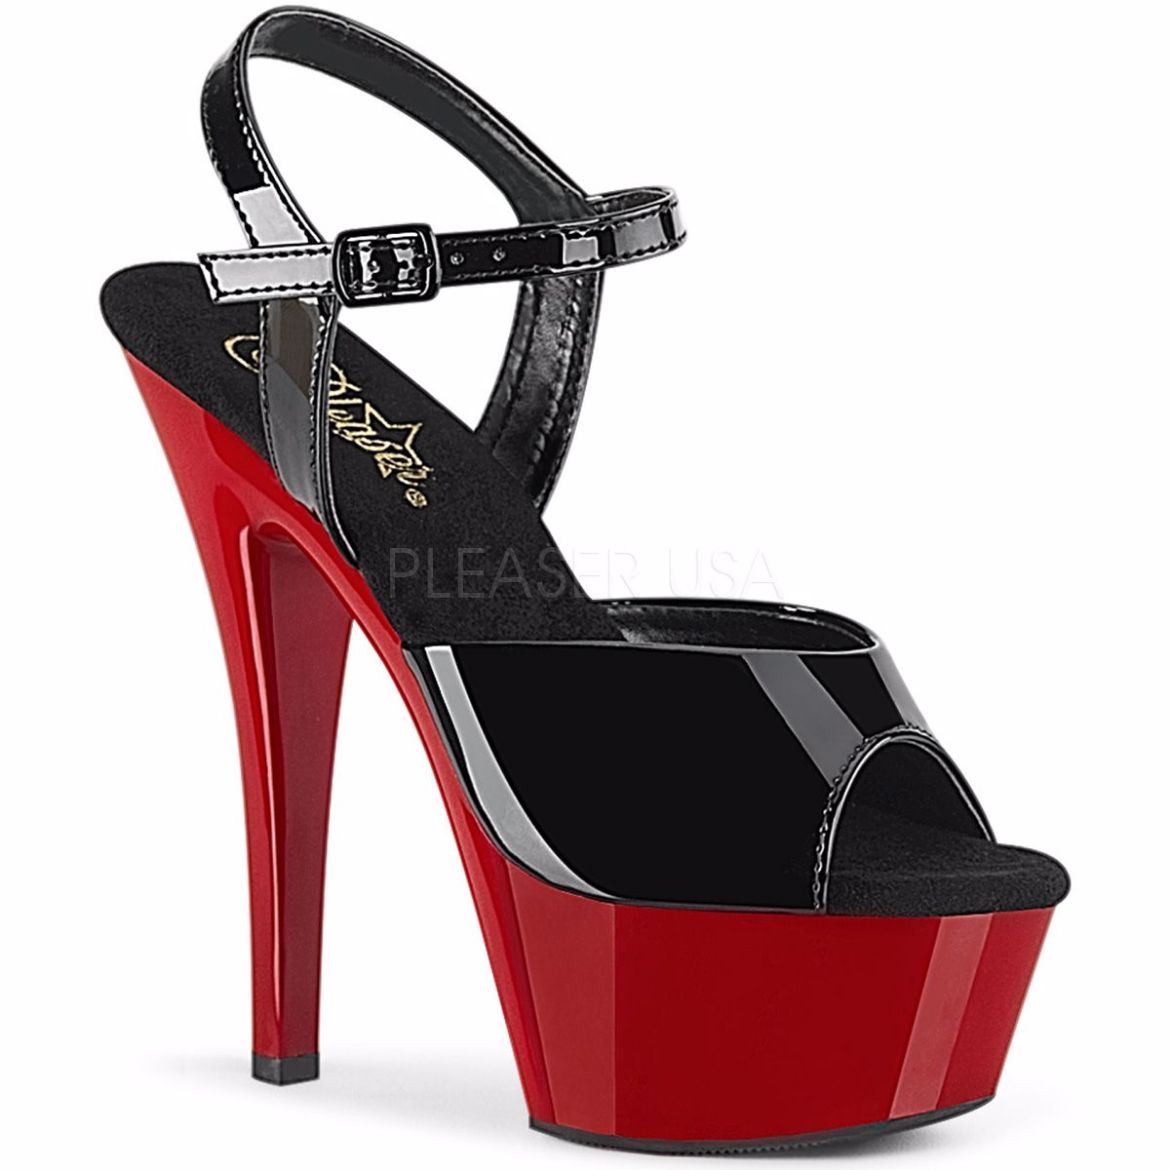 Product image of Pleaser KISS-209 Black Patent/Red 6 inch (15.2 cm) Heel 1 3/4 inch (4.5 cm) Platform Ankle Strap Sandal Shoes